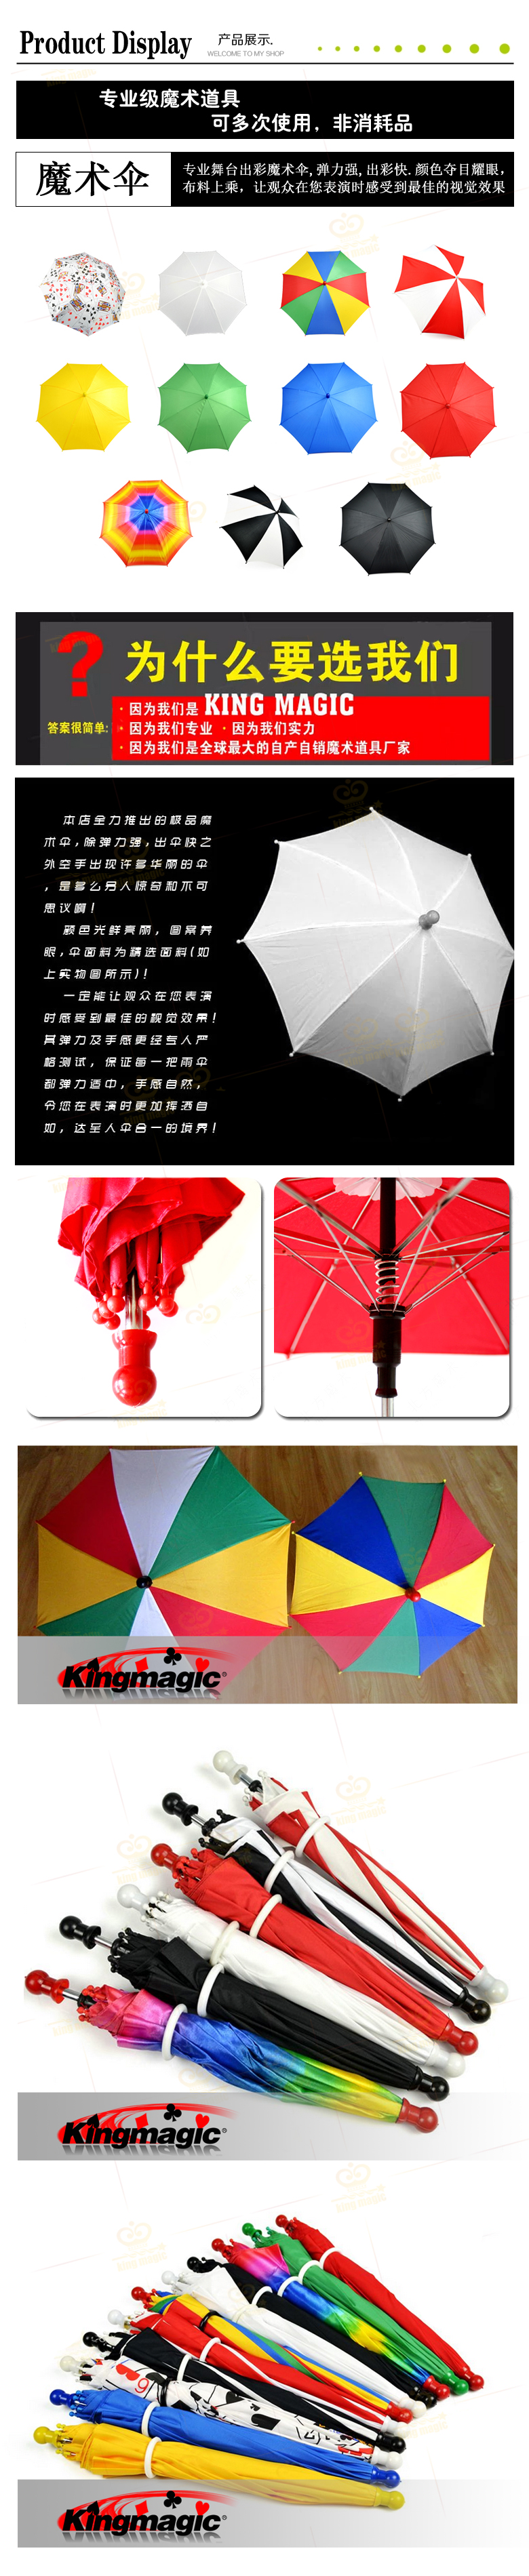 Картка парасольку